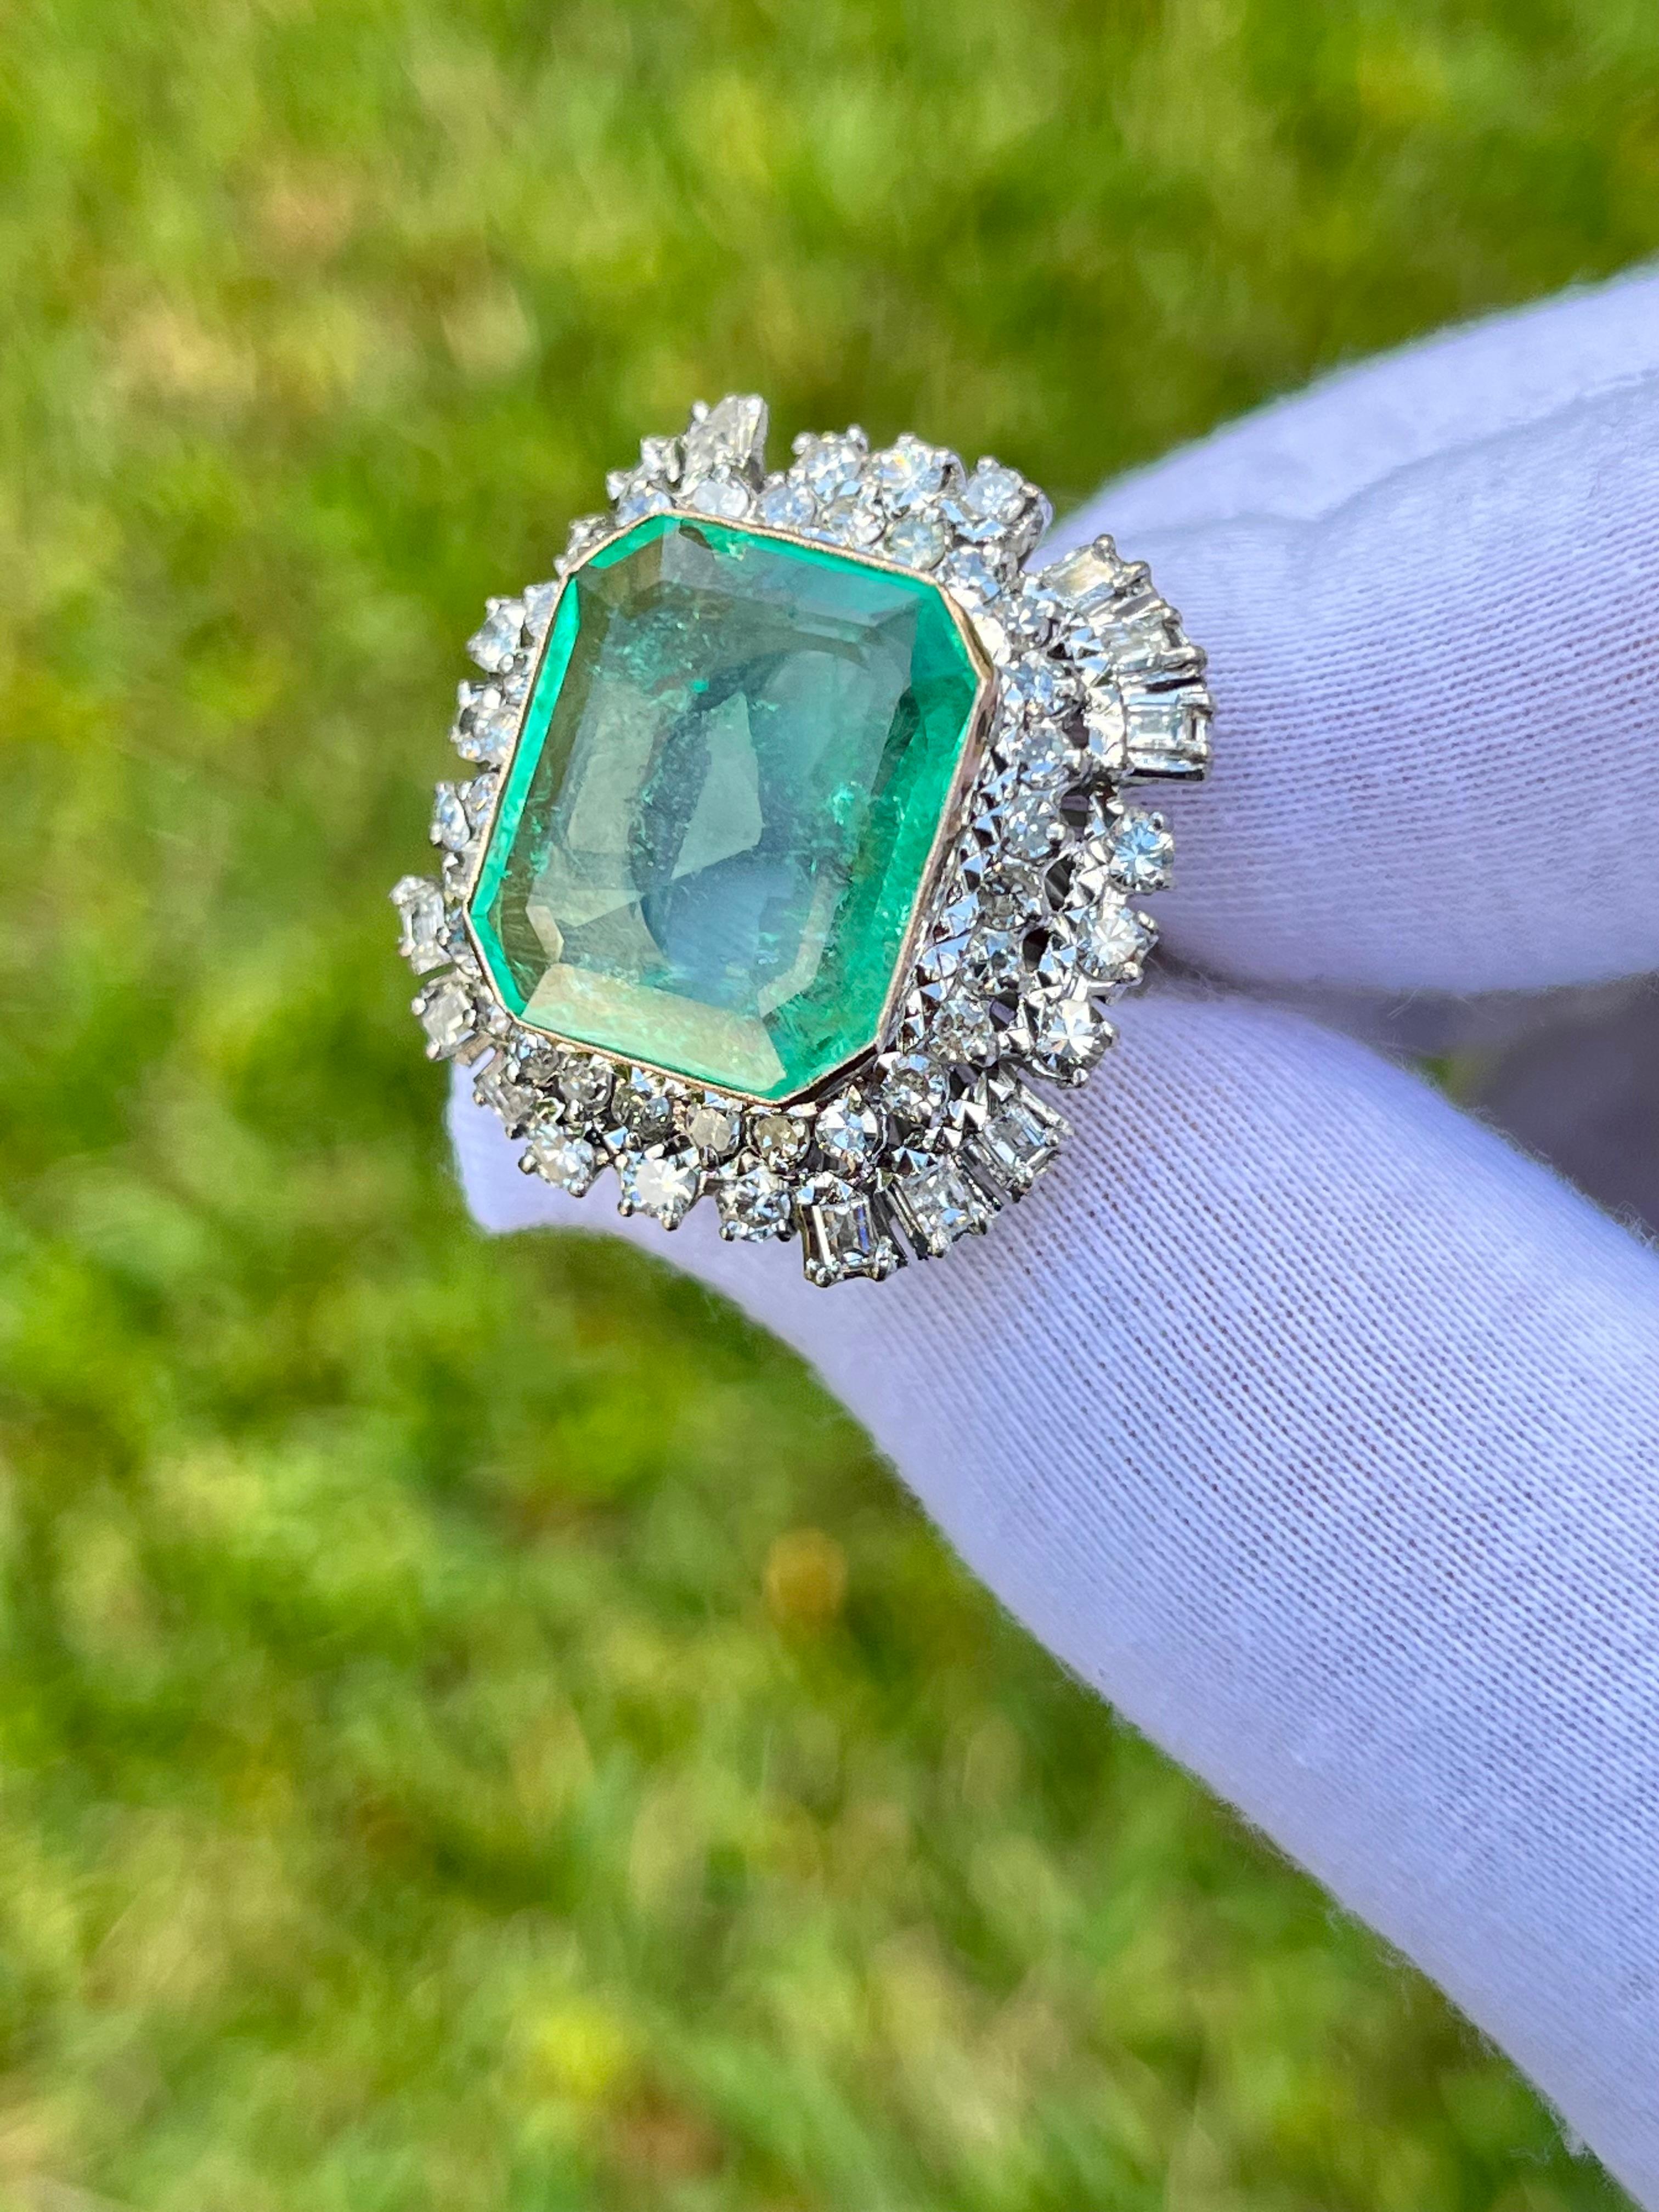 12 carat emerald ring